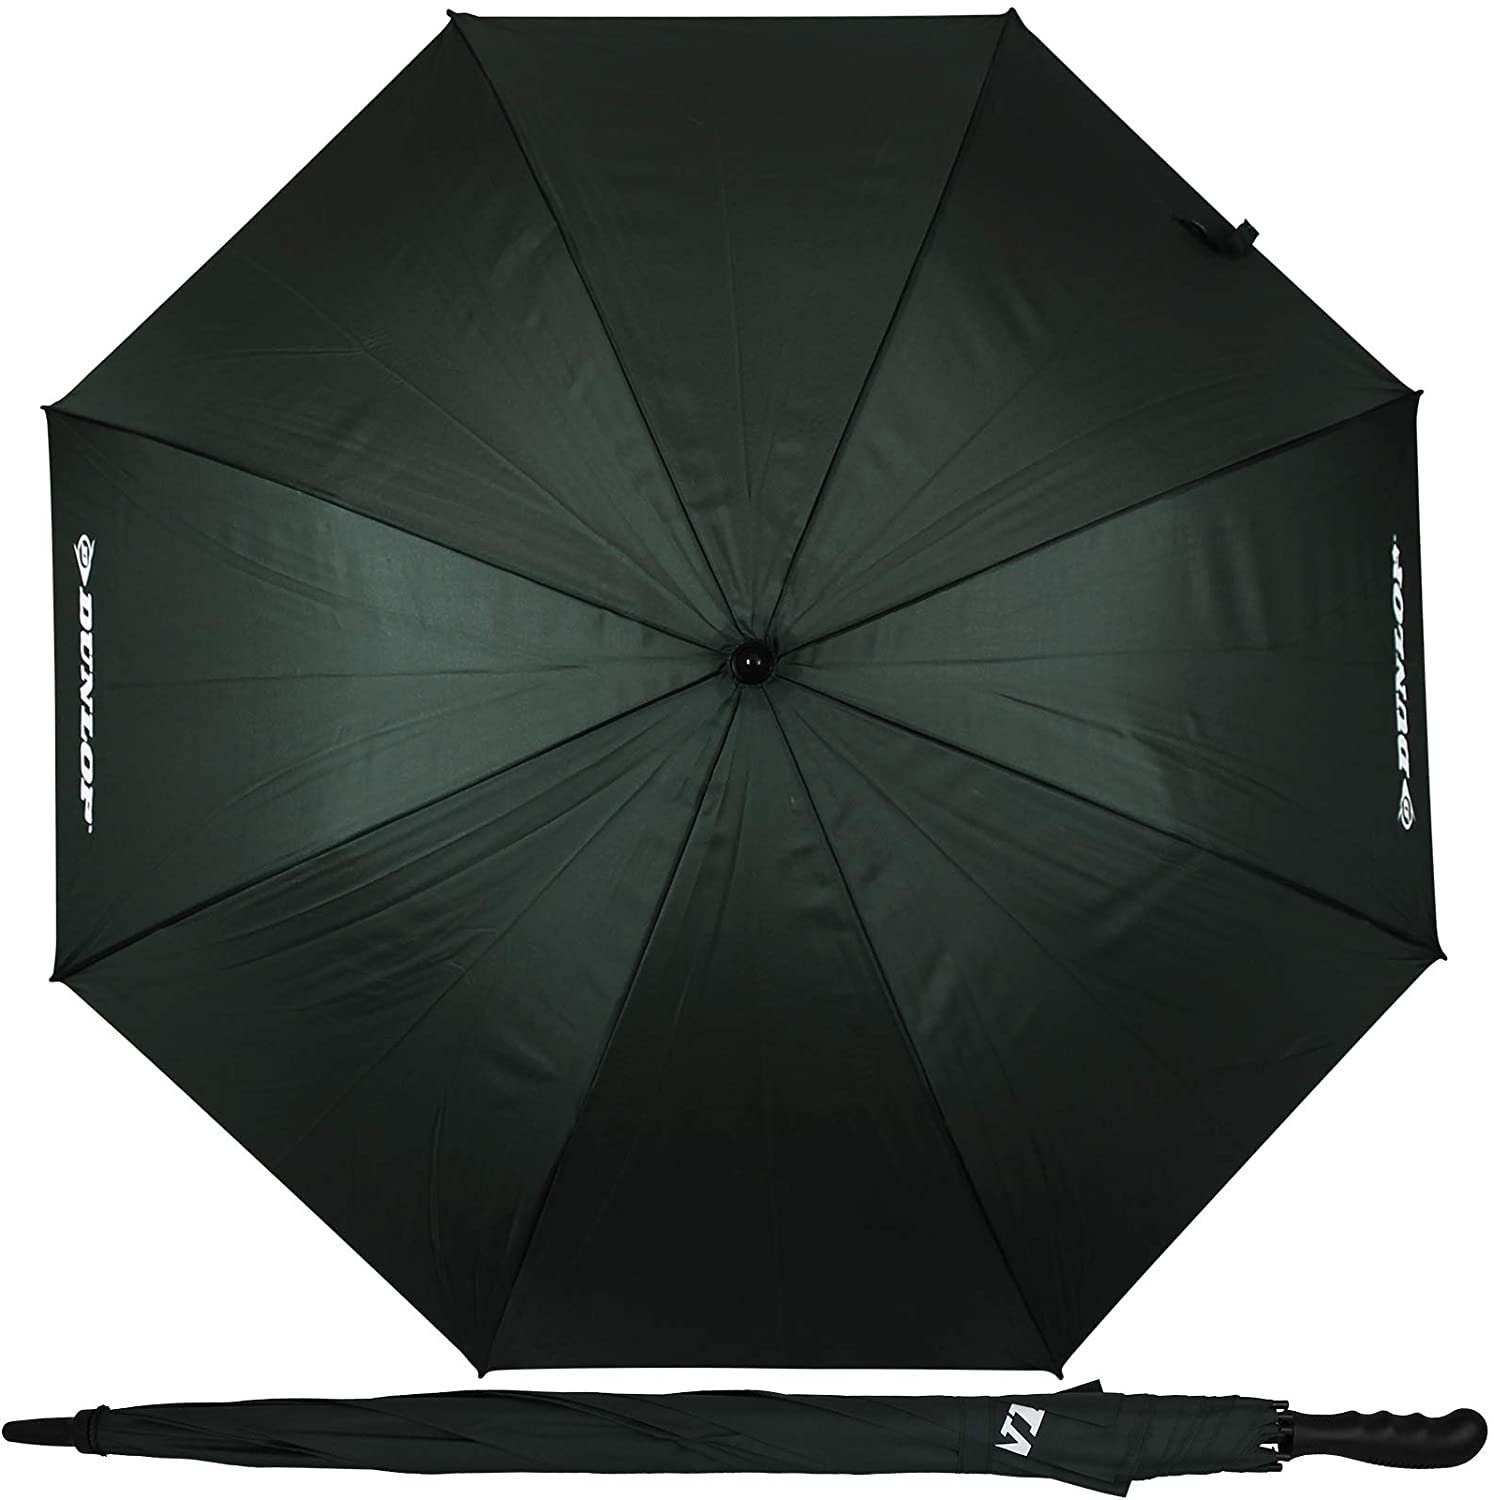 Dokado Partnerschirm XXL Familienschirm für Personen schwarz Regenschirm Partnerschirm Doppelregenschirm Stockschirm 130cm Paar mit Dunlop 2 Farbwahl